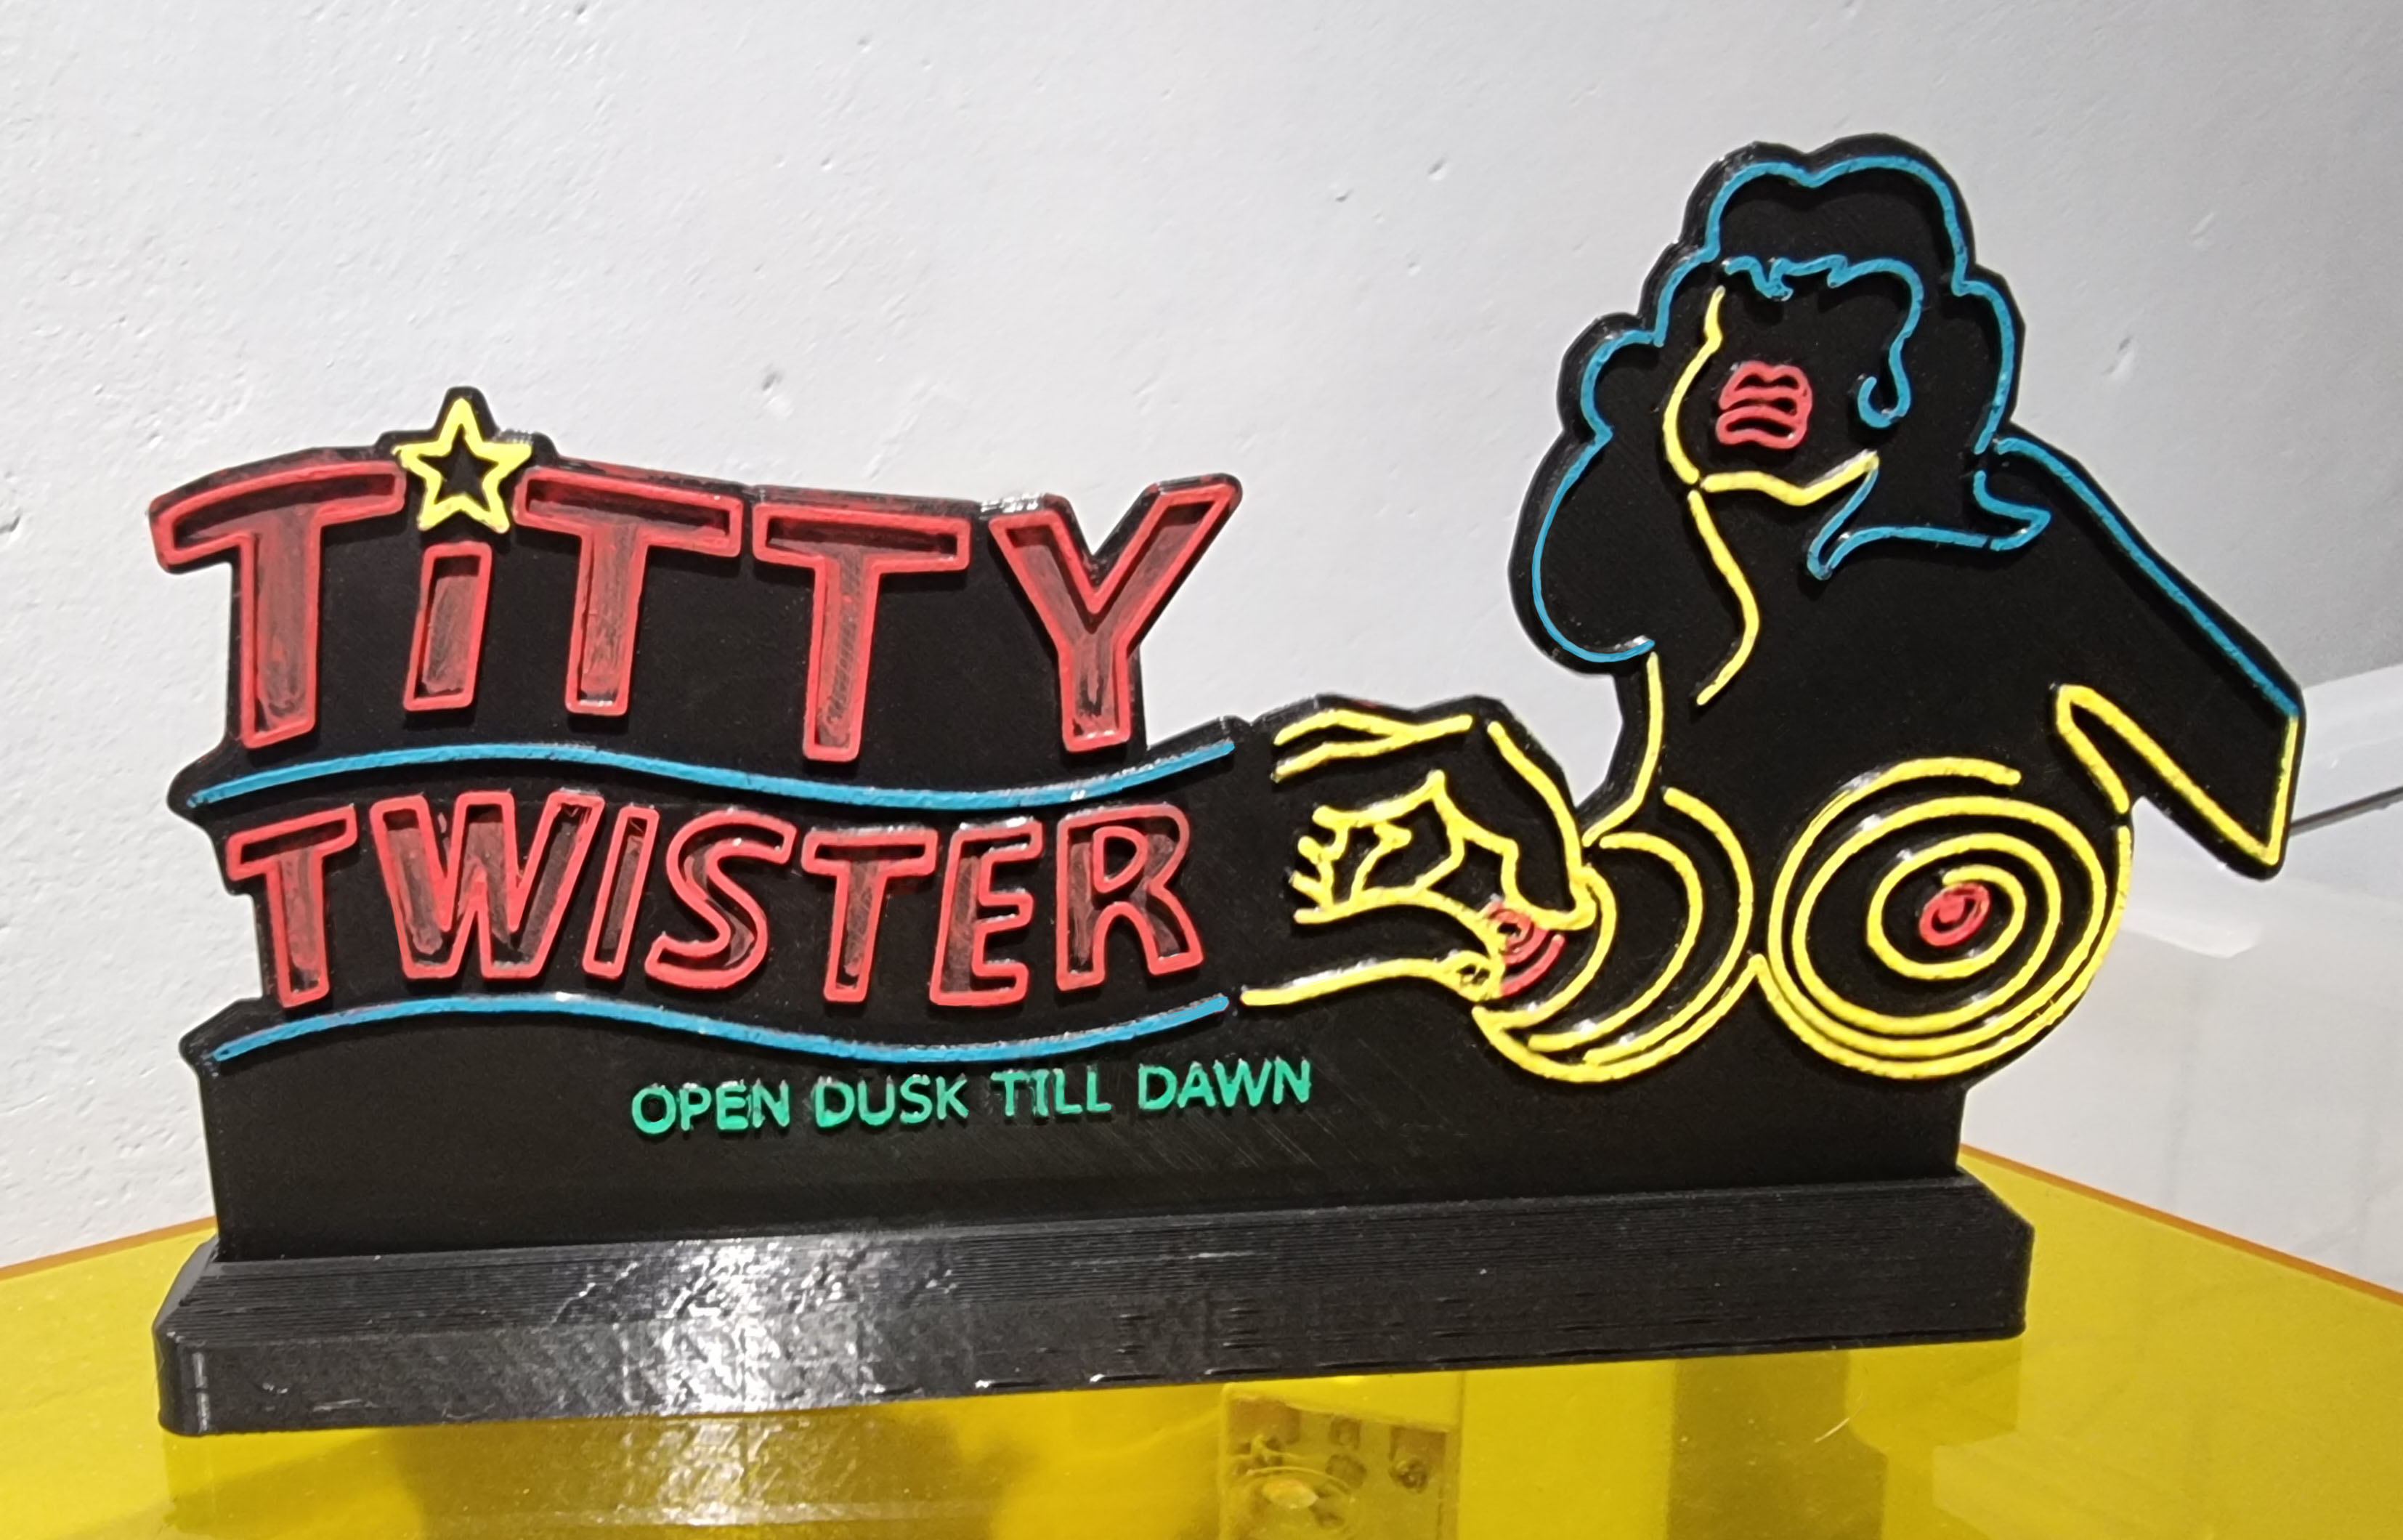 Titty Twister logo